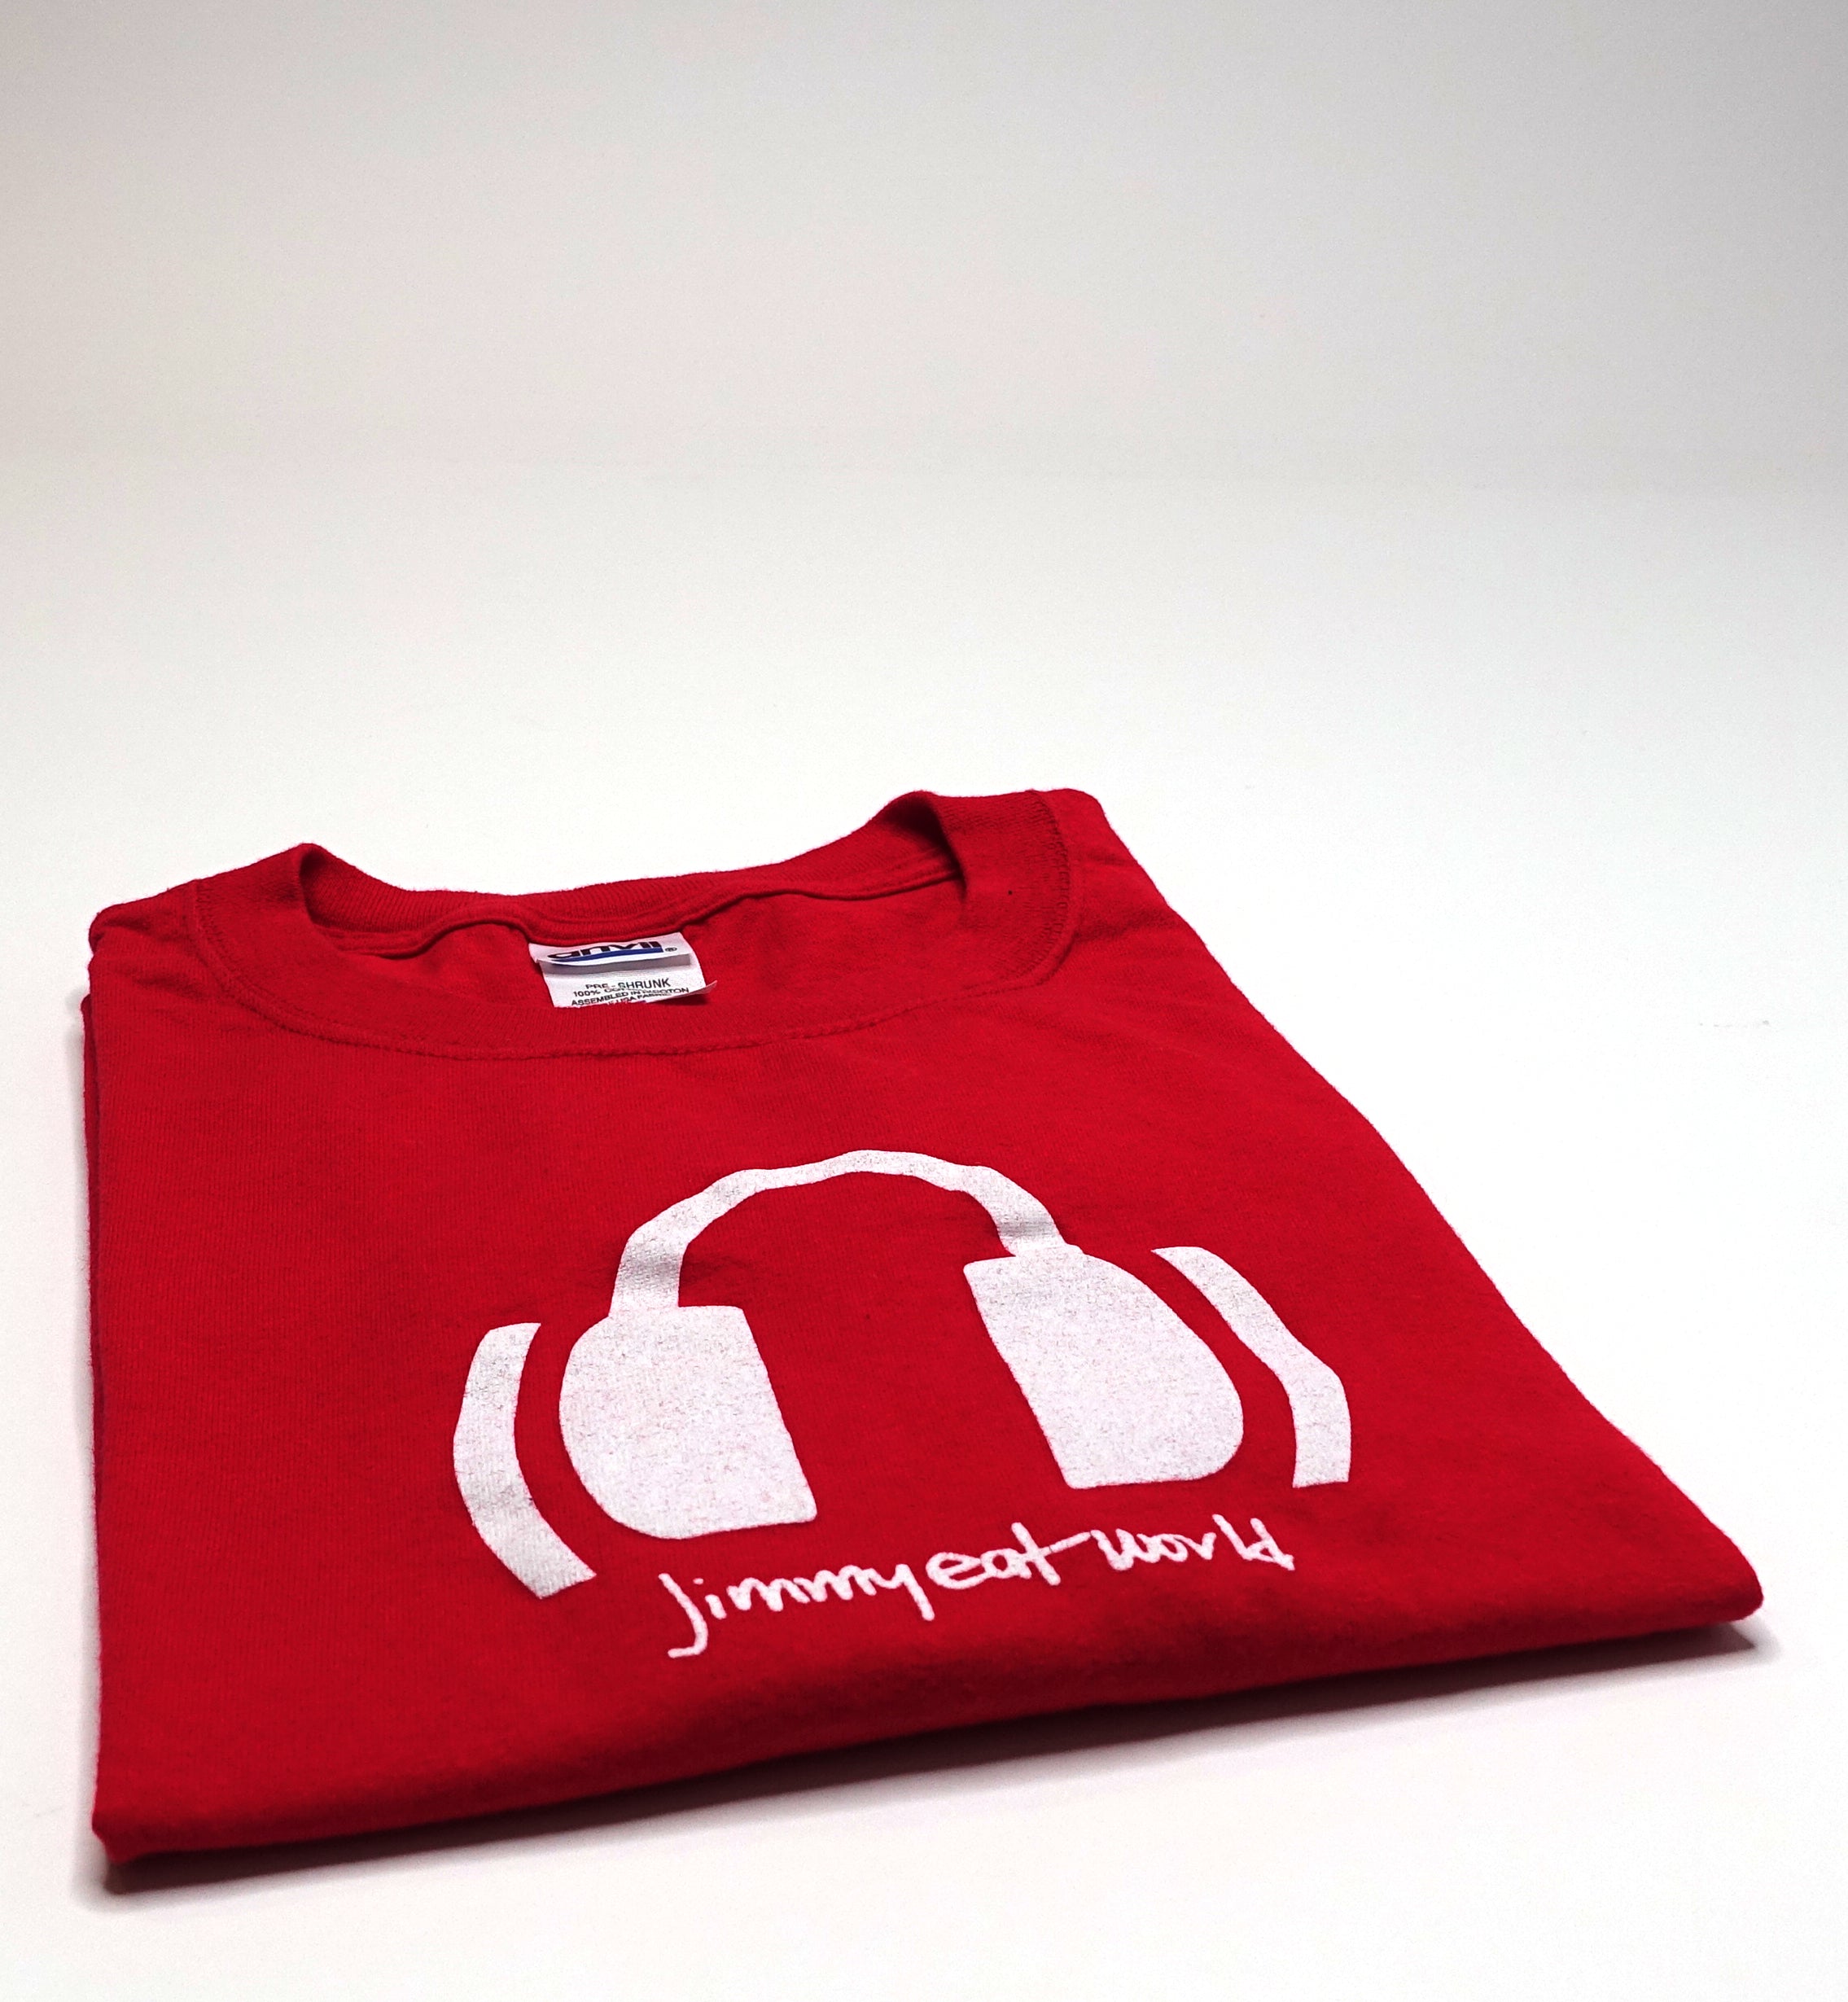 Jimmy Eat World - Bleed American / Headphones 2001 Tour Shirt Size XL